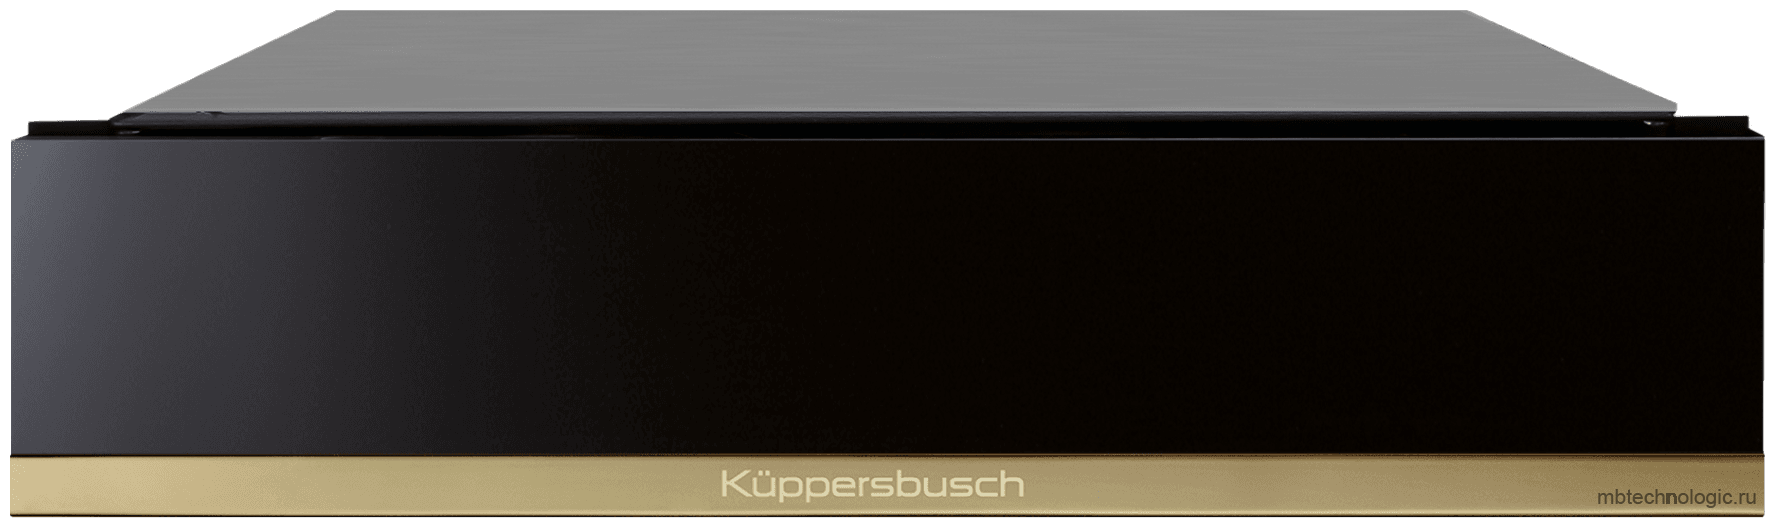 Kuppersbusch CSV 6800.0